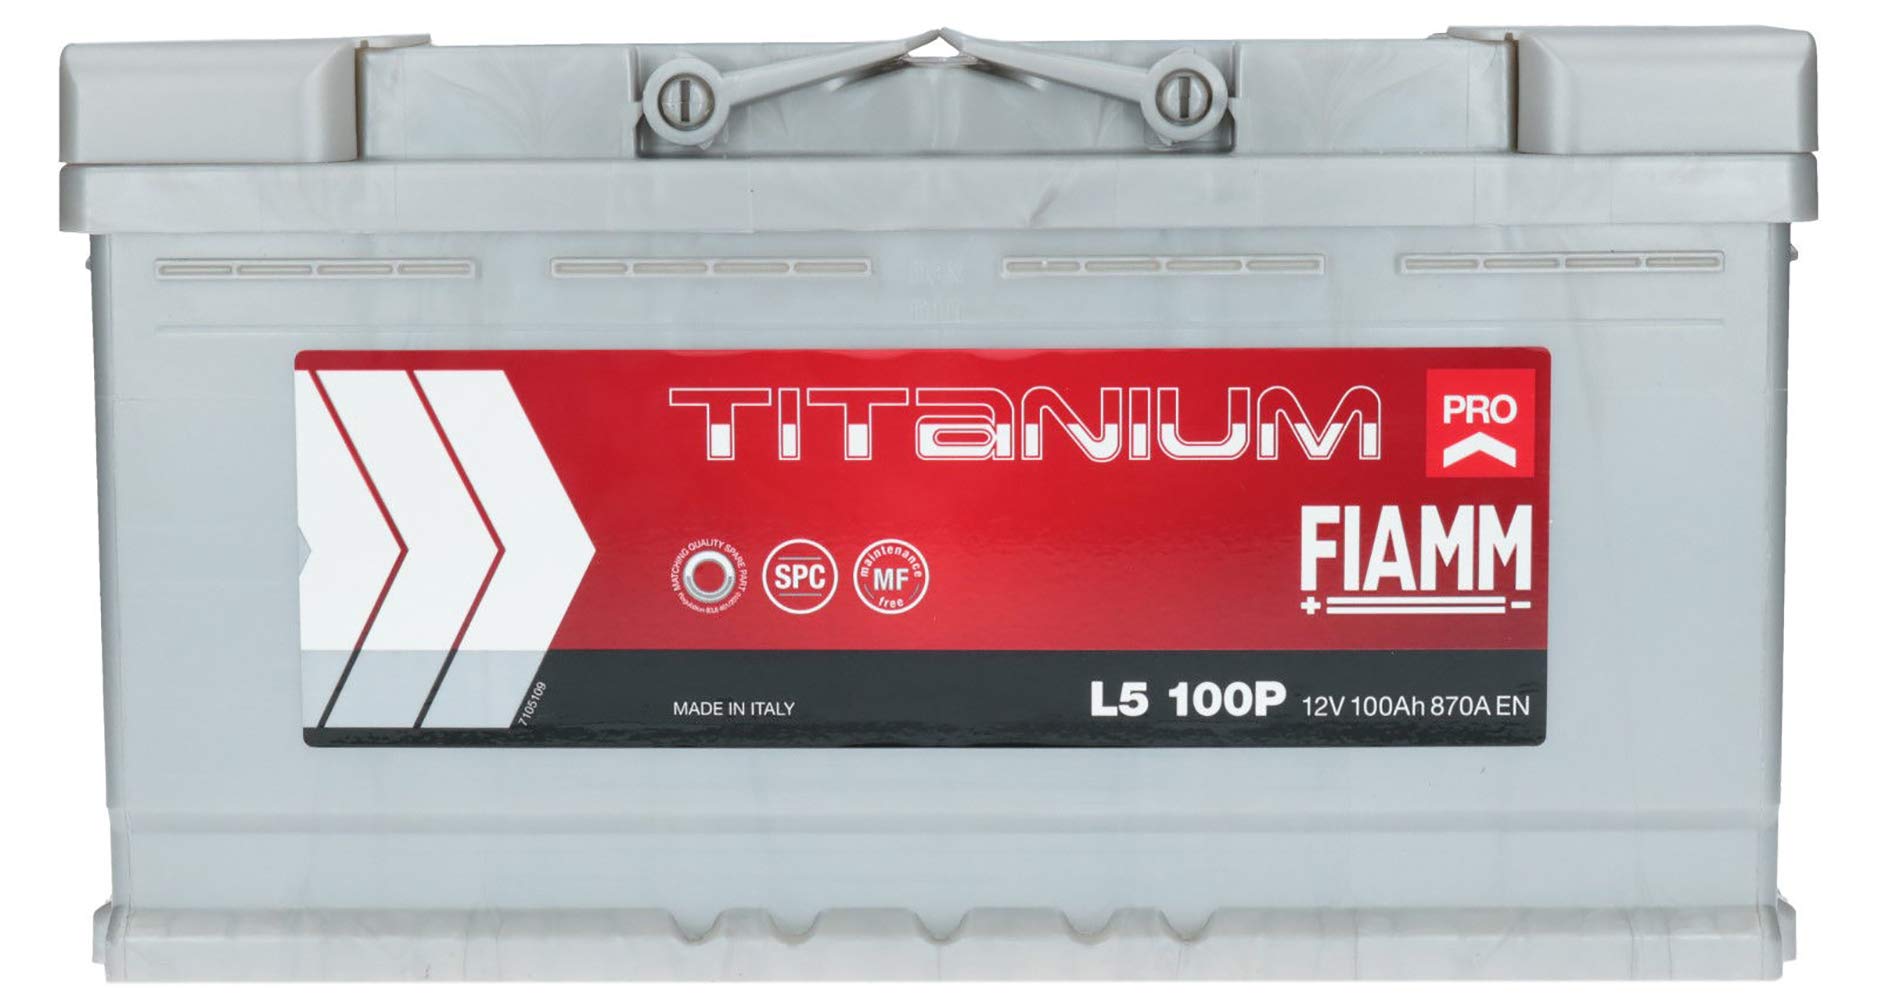 Kfz-Batterie Fiamm Titanium Pro, 100 Ah, 870A L5 100P 7905160 von Fiamm